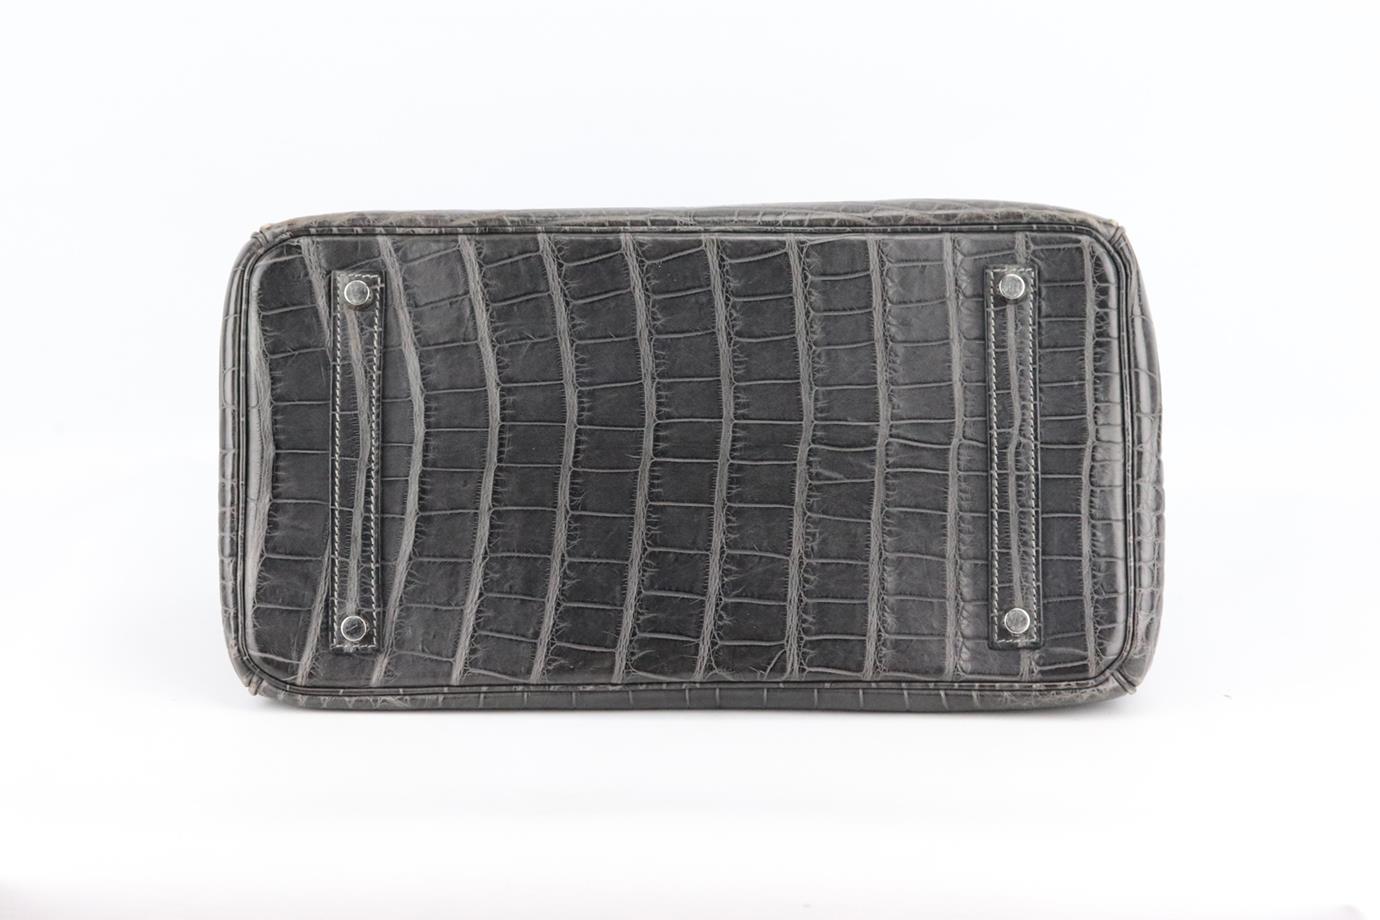 Hermès 2010 Birkin 35cm Matte Alligator Mississippiensis Leather Bag For Sale 2